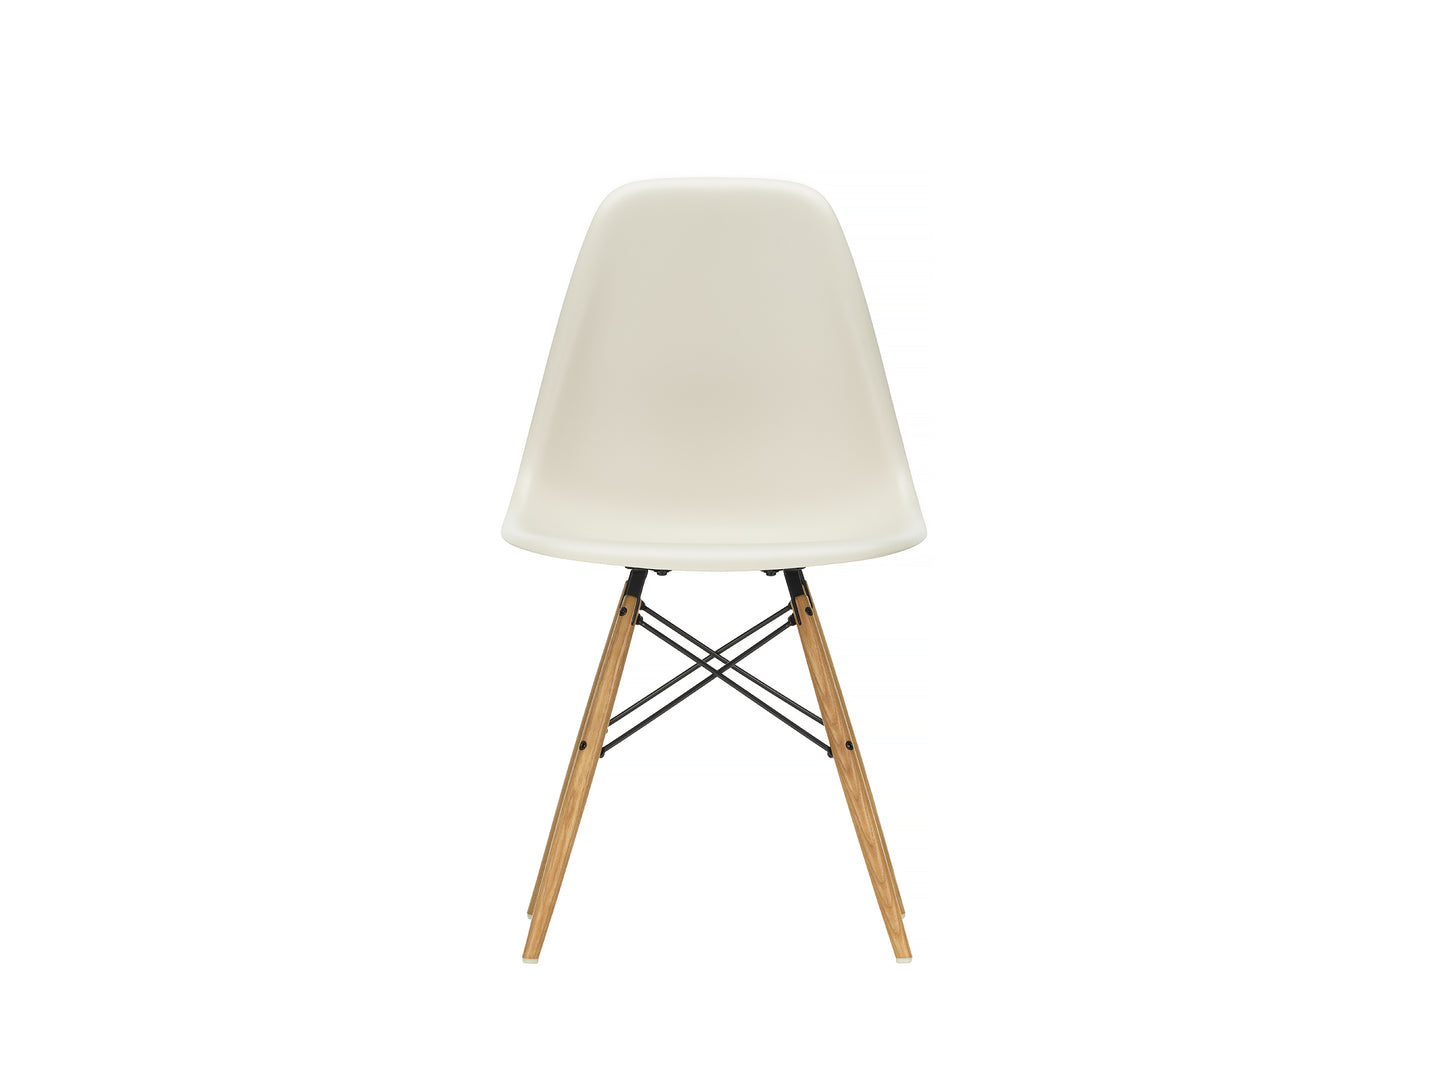 Vitra Eames DSW Plastic Side Chair - Pebble11 / Golden Ash